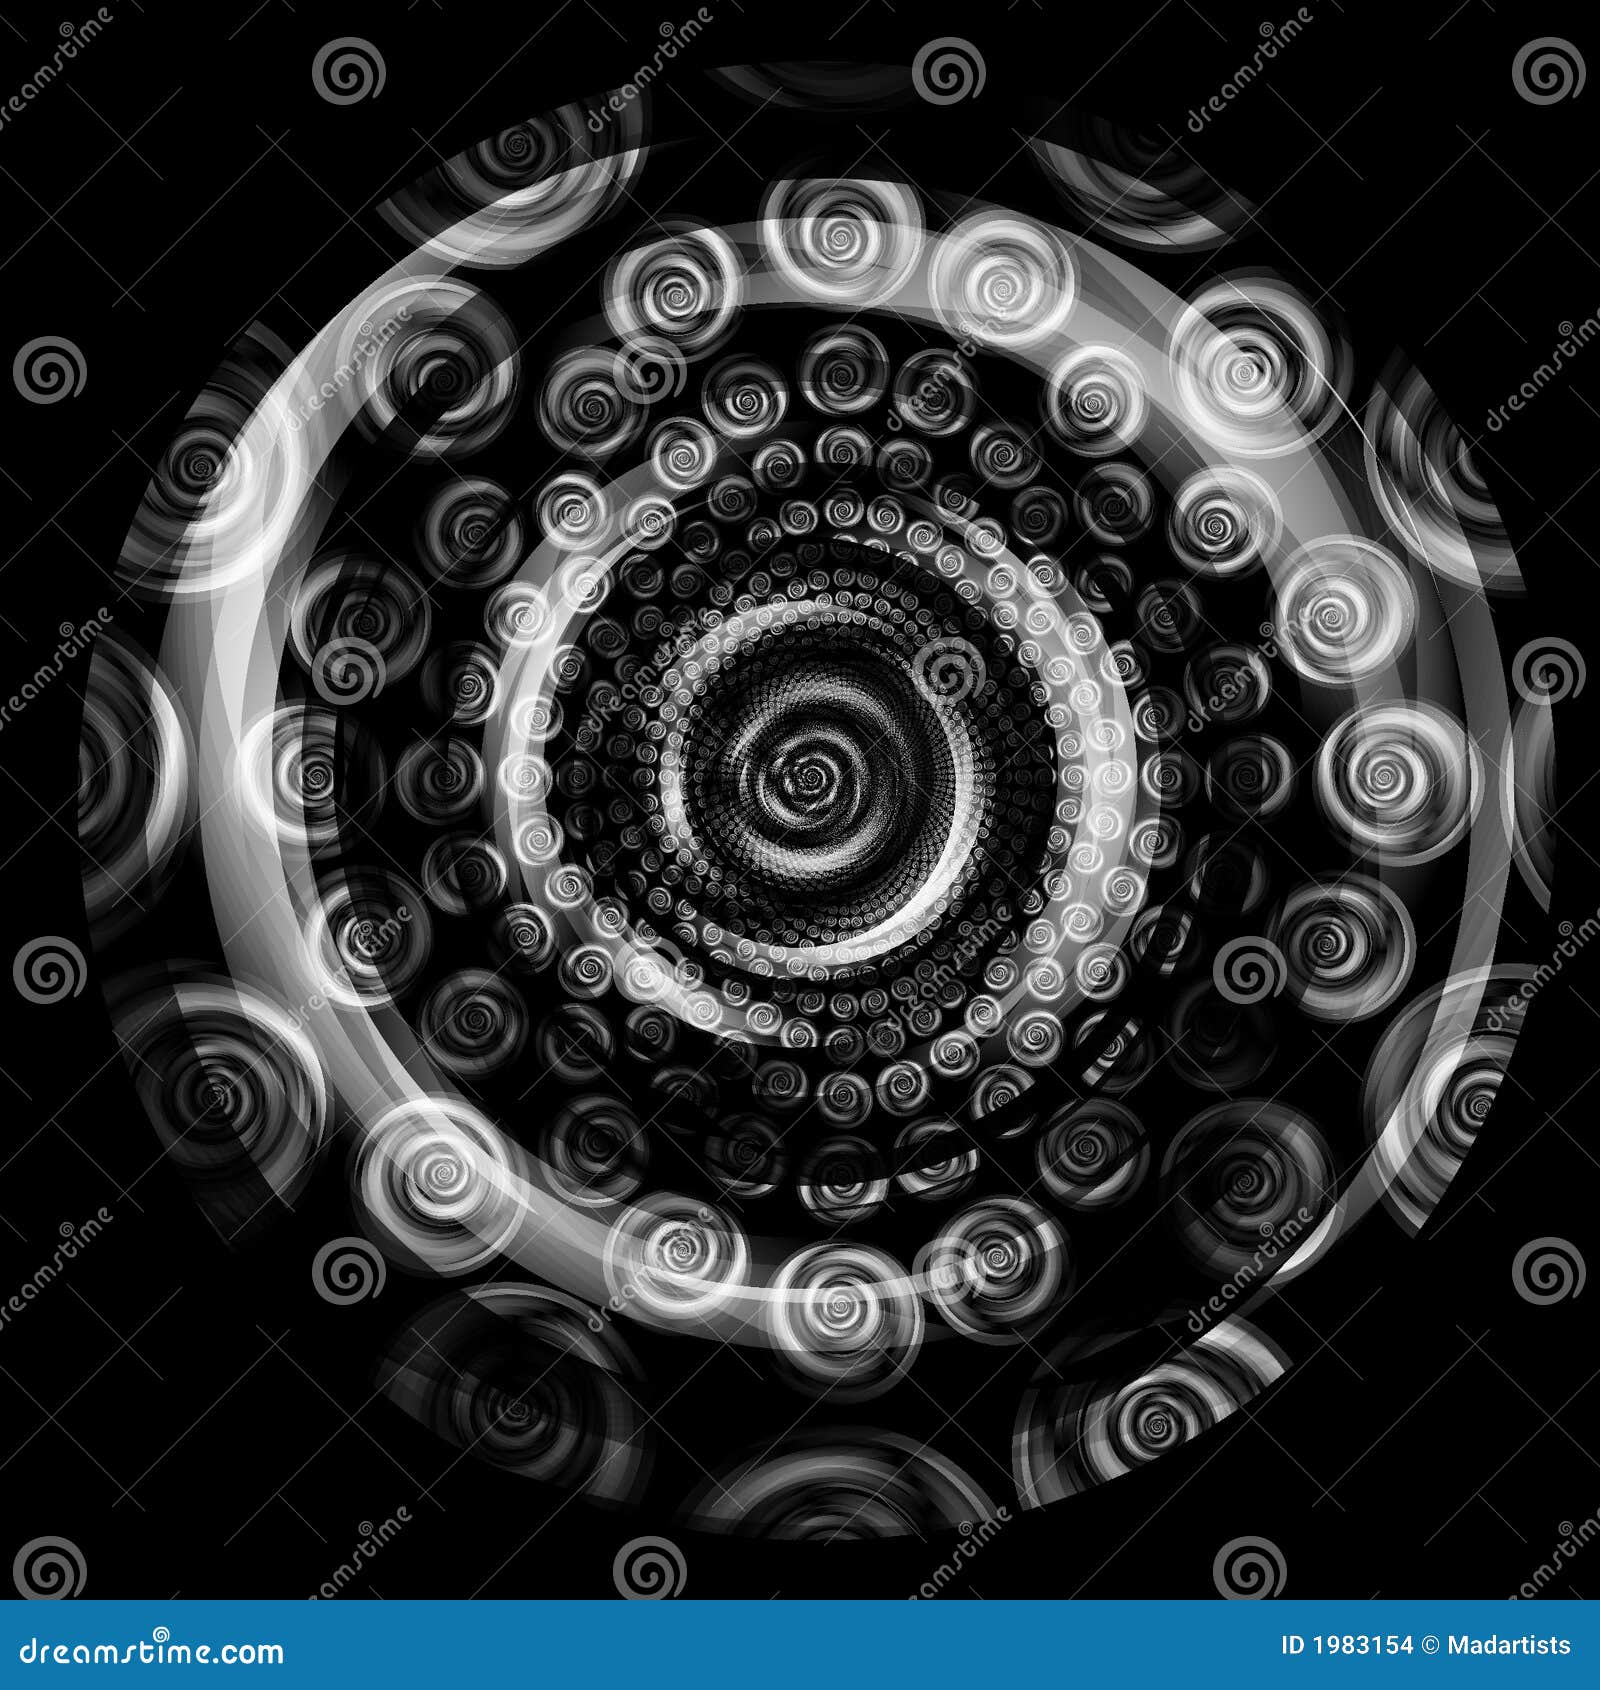 black hole spirals and circles